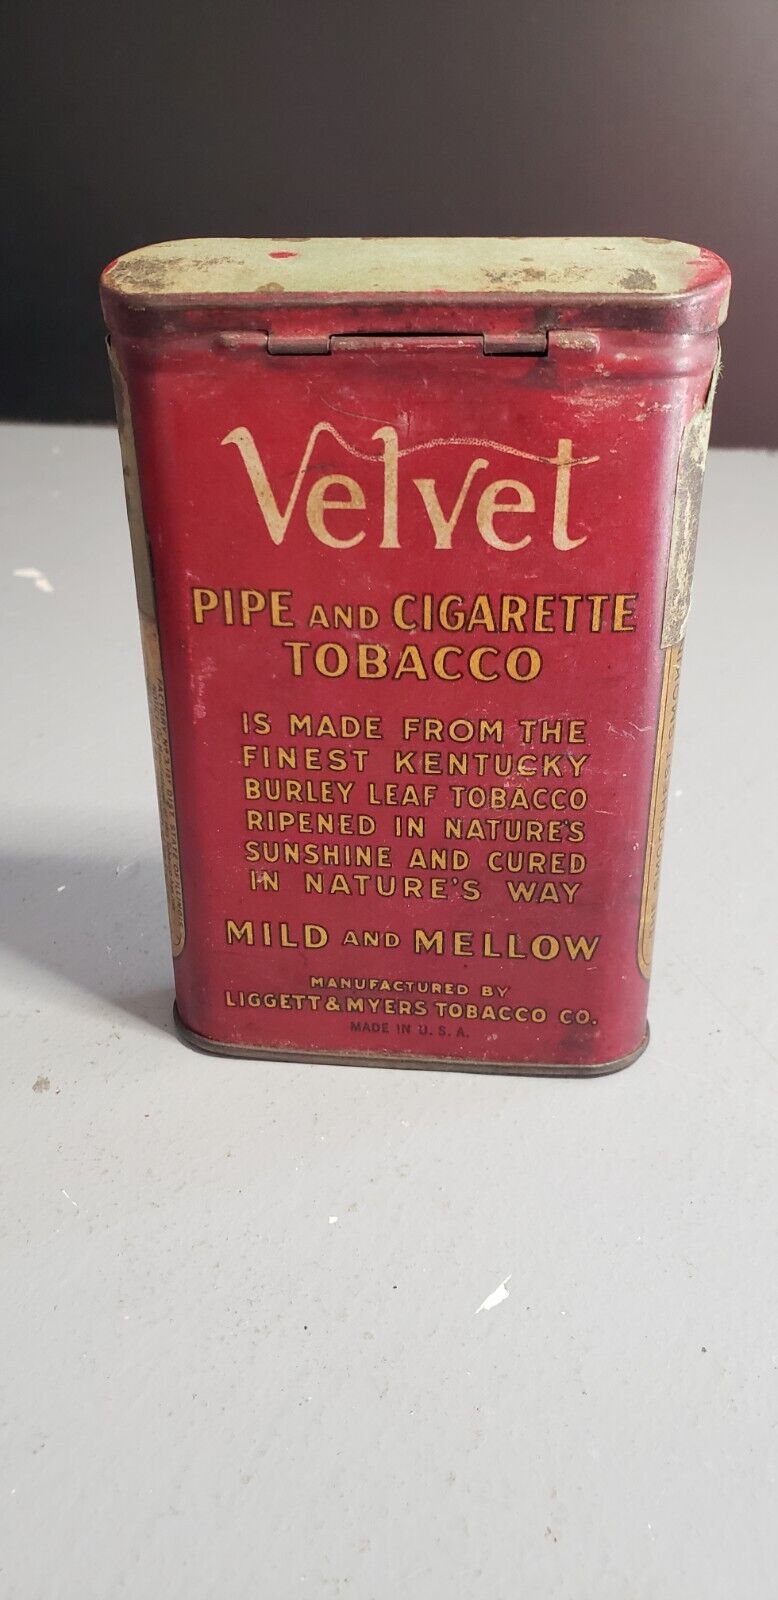 Vintage Velvet Pipe and Cigarette Tobacco Tin, Vintage Advertising Tin, Empty, Red